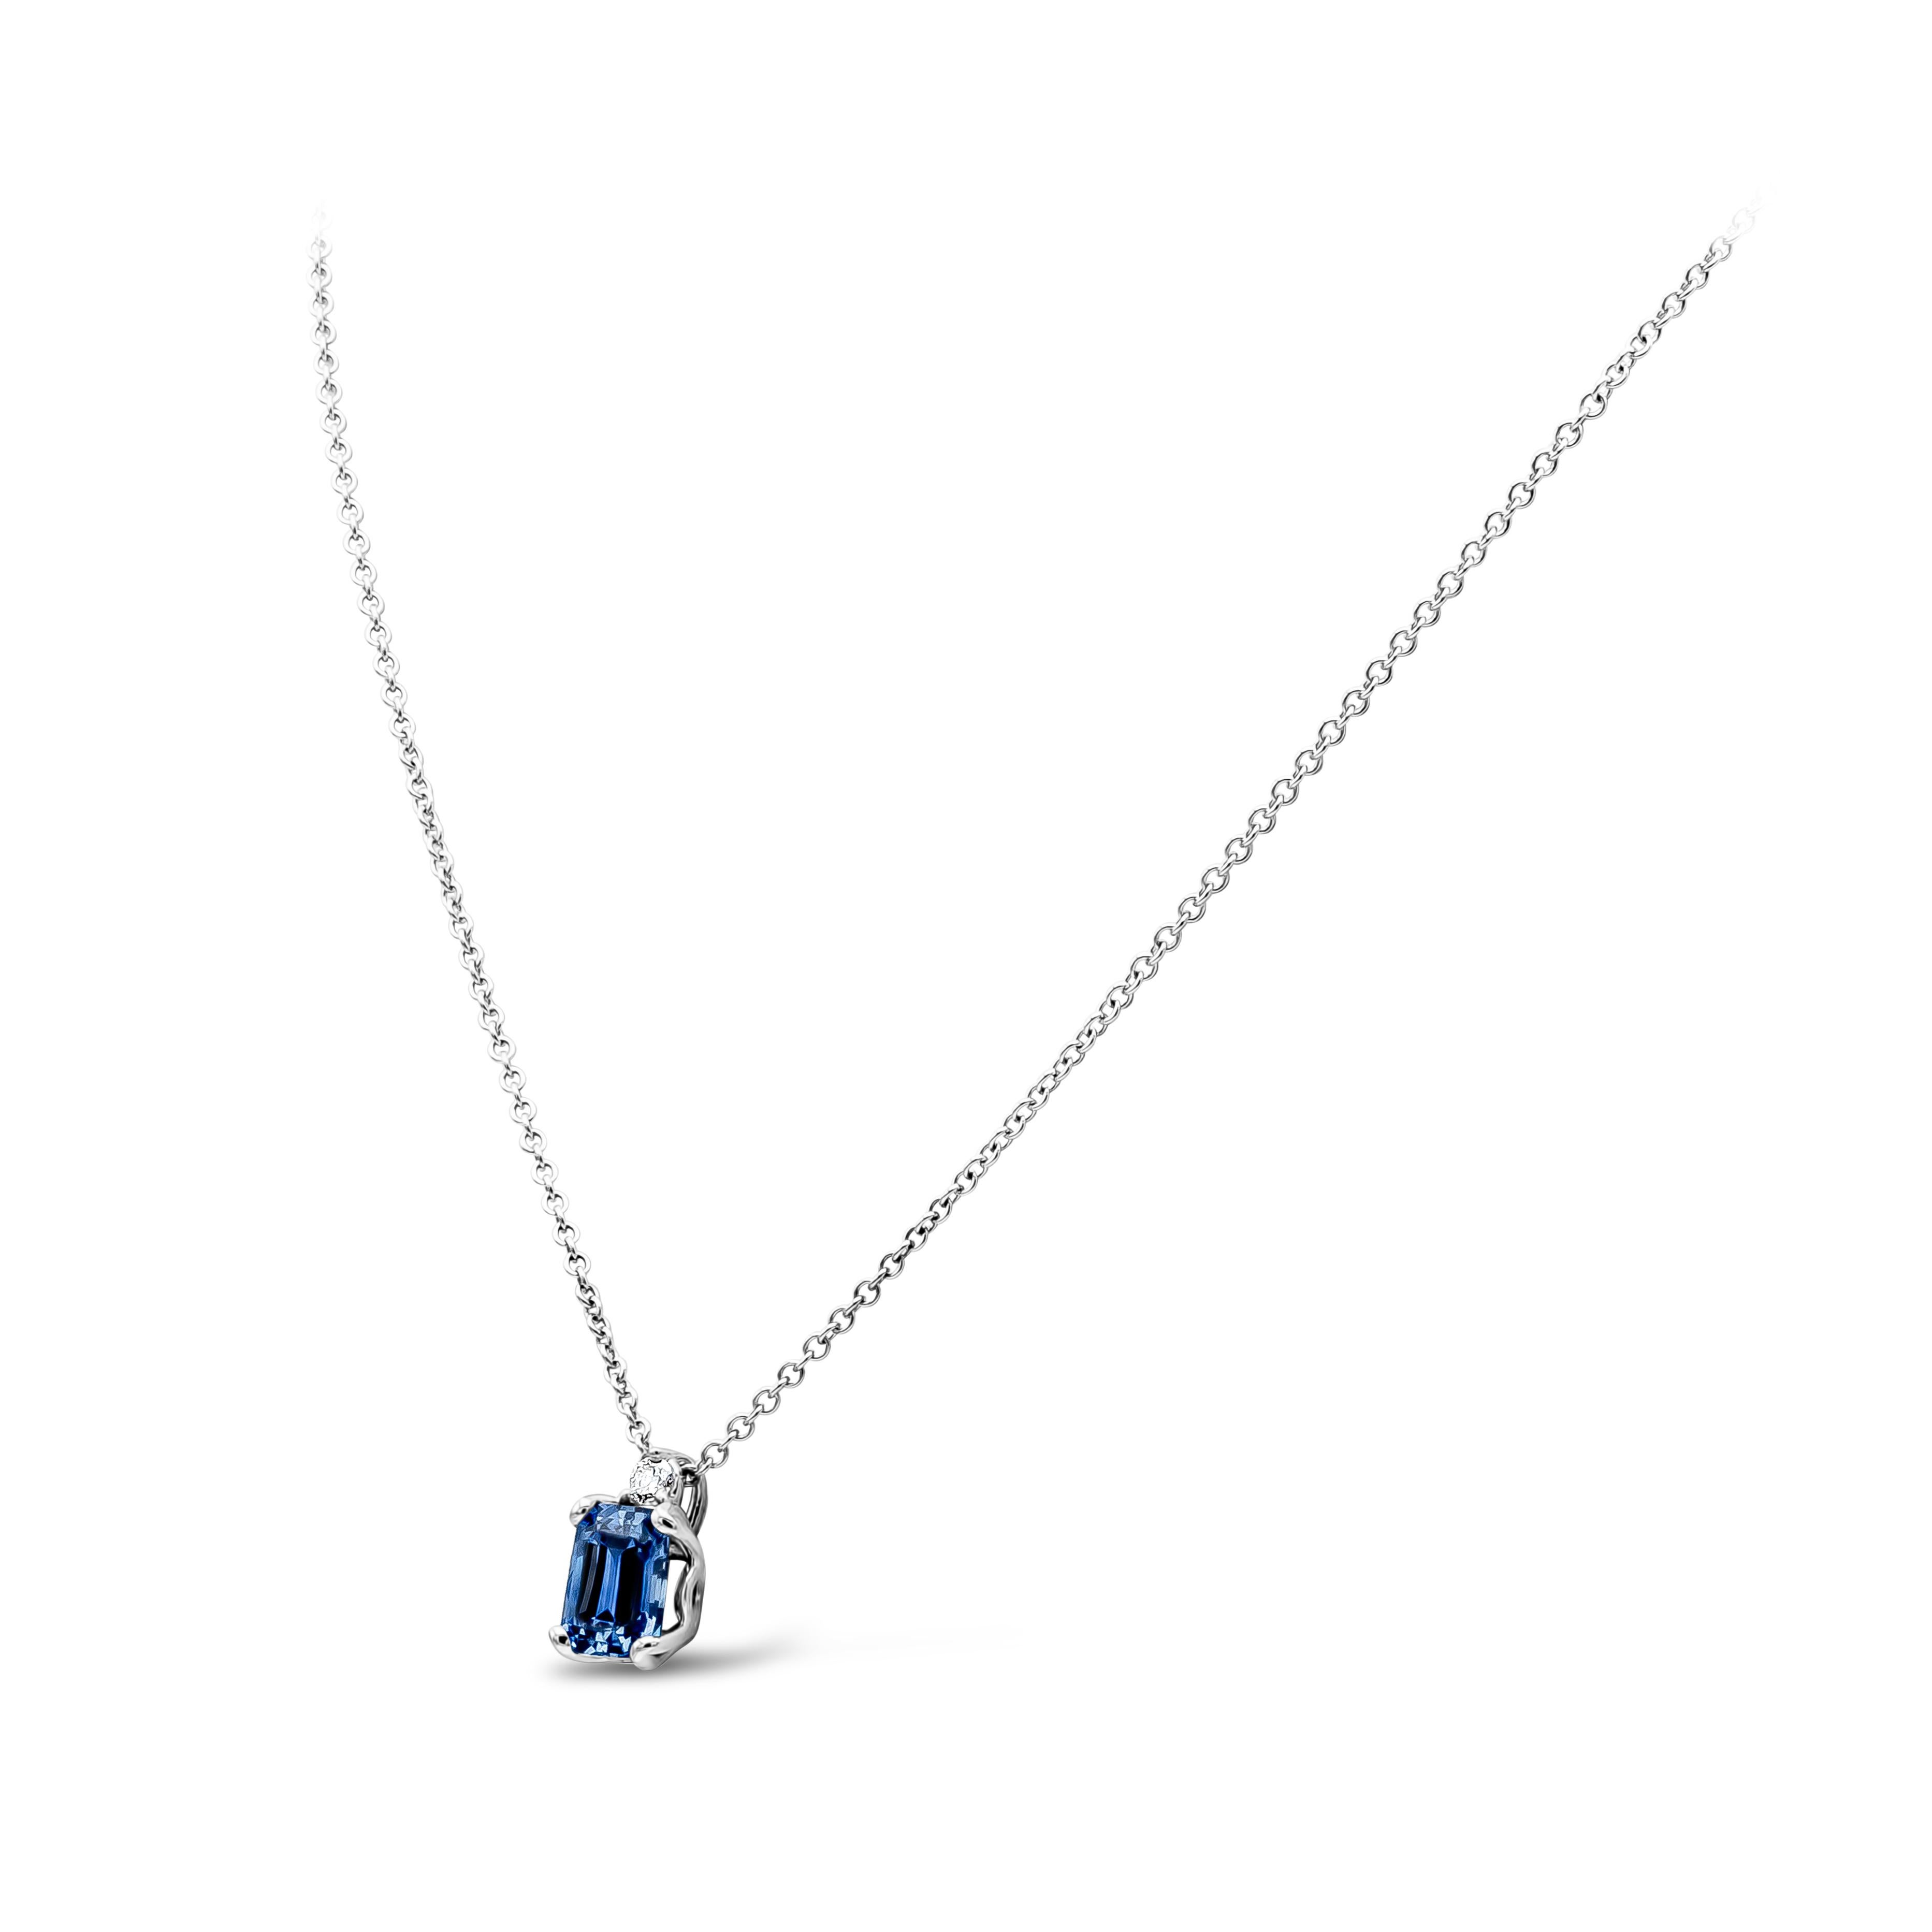 Contemporary Roman Malakov GIA Certified 2.77 Carat Emerald Cut Sapphire Pendant Necklace For Sale